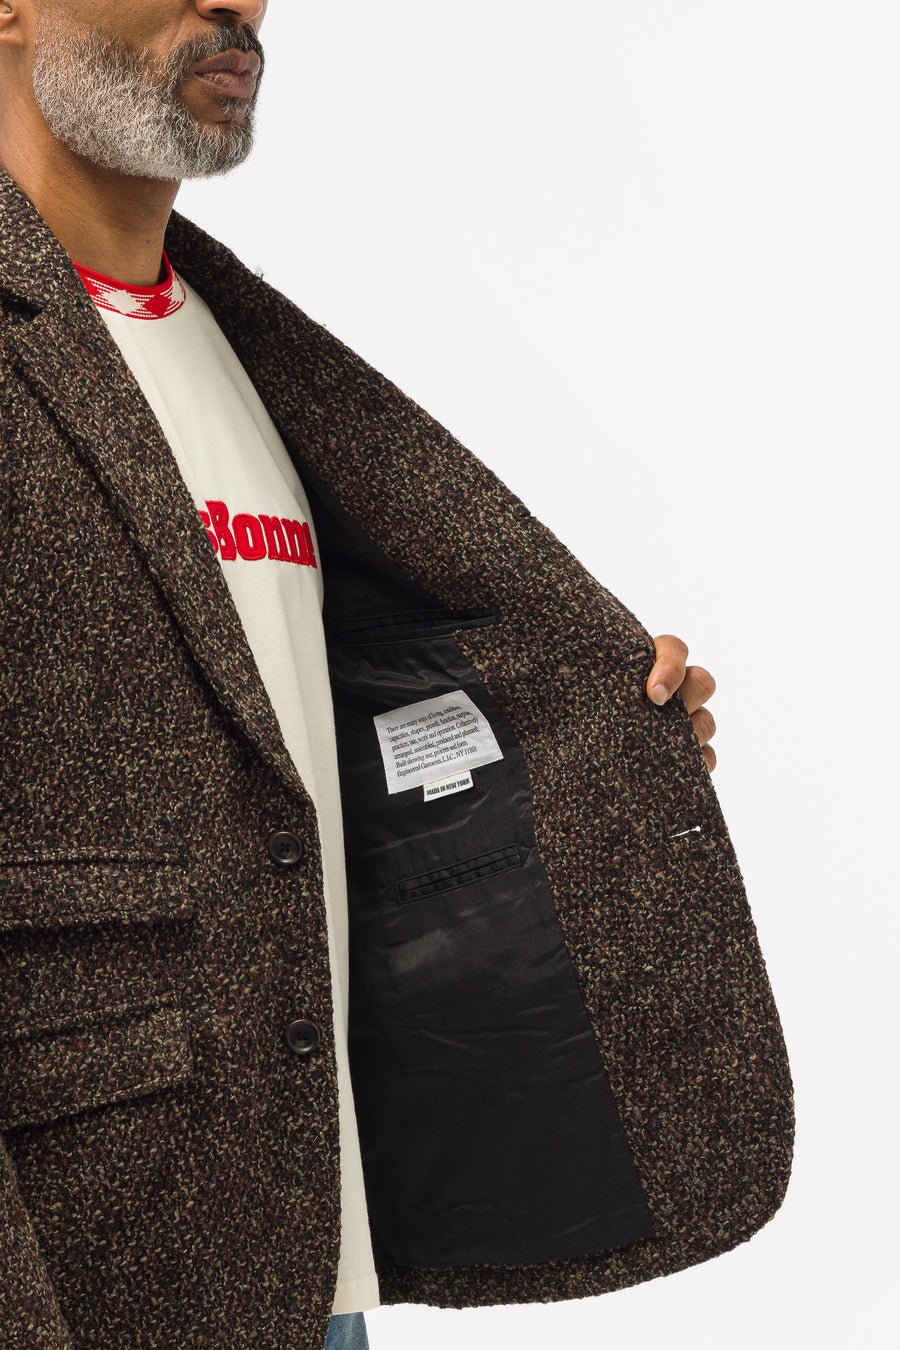 Engineered Garments - Andover Jacket in Dark Brown